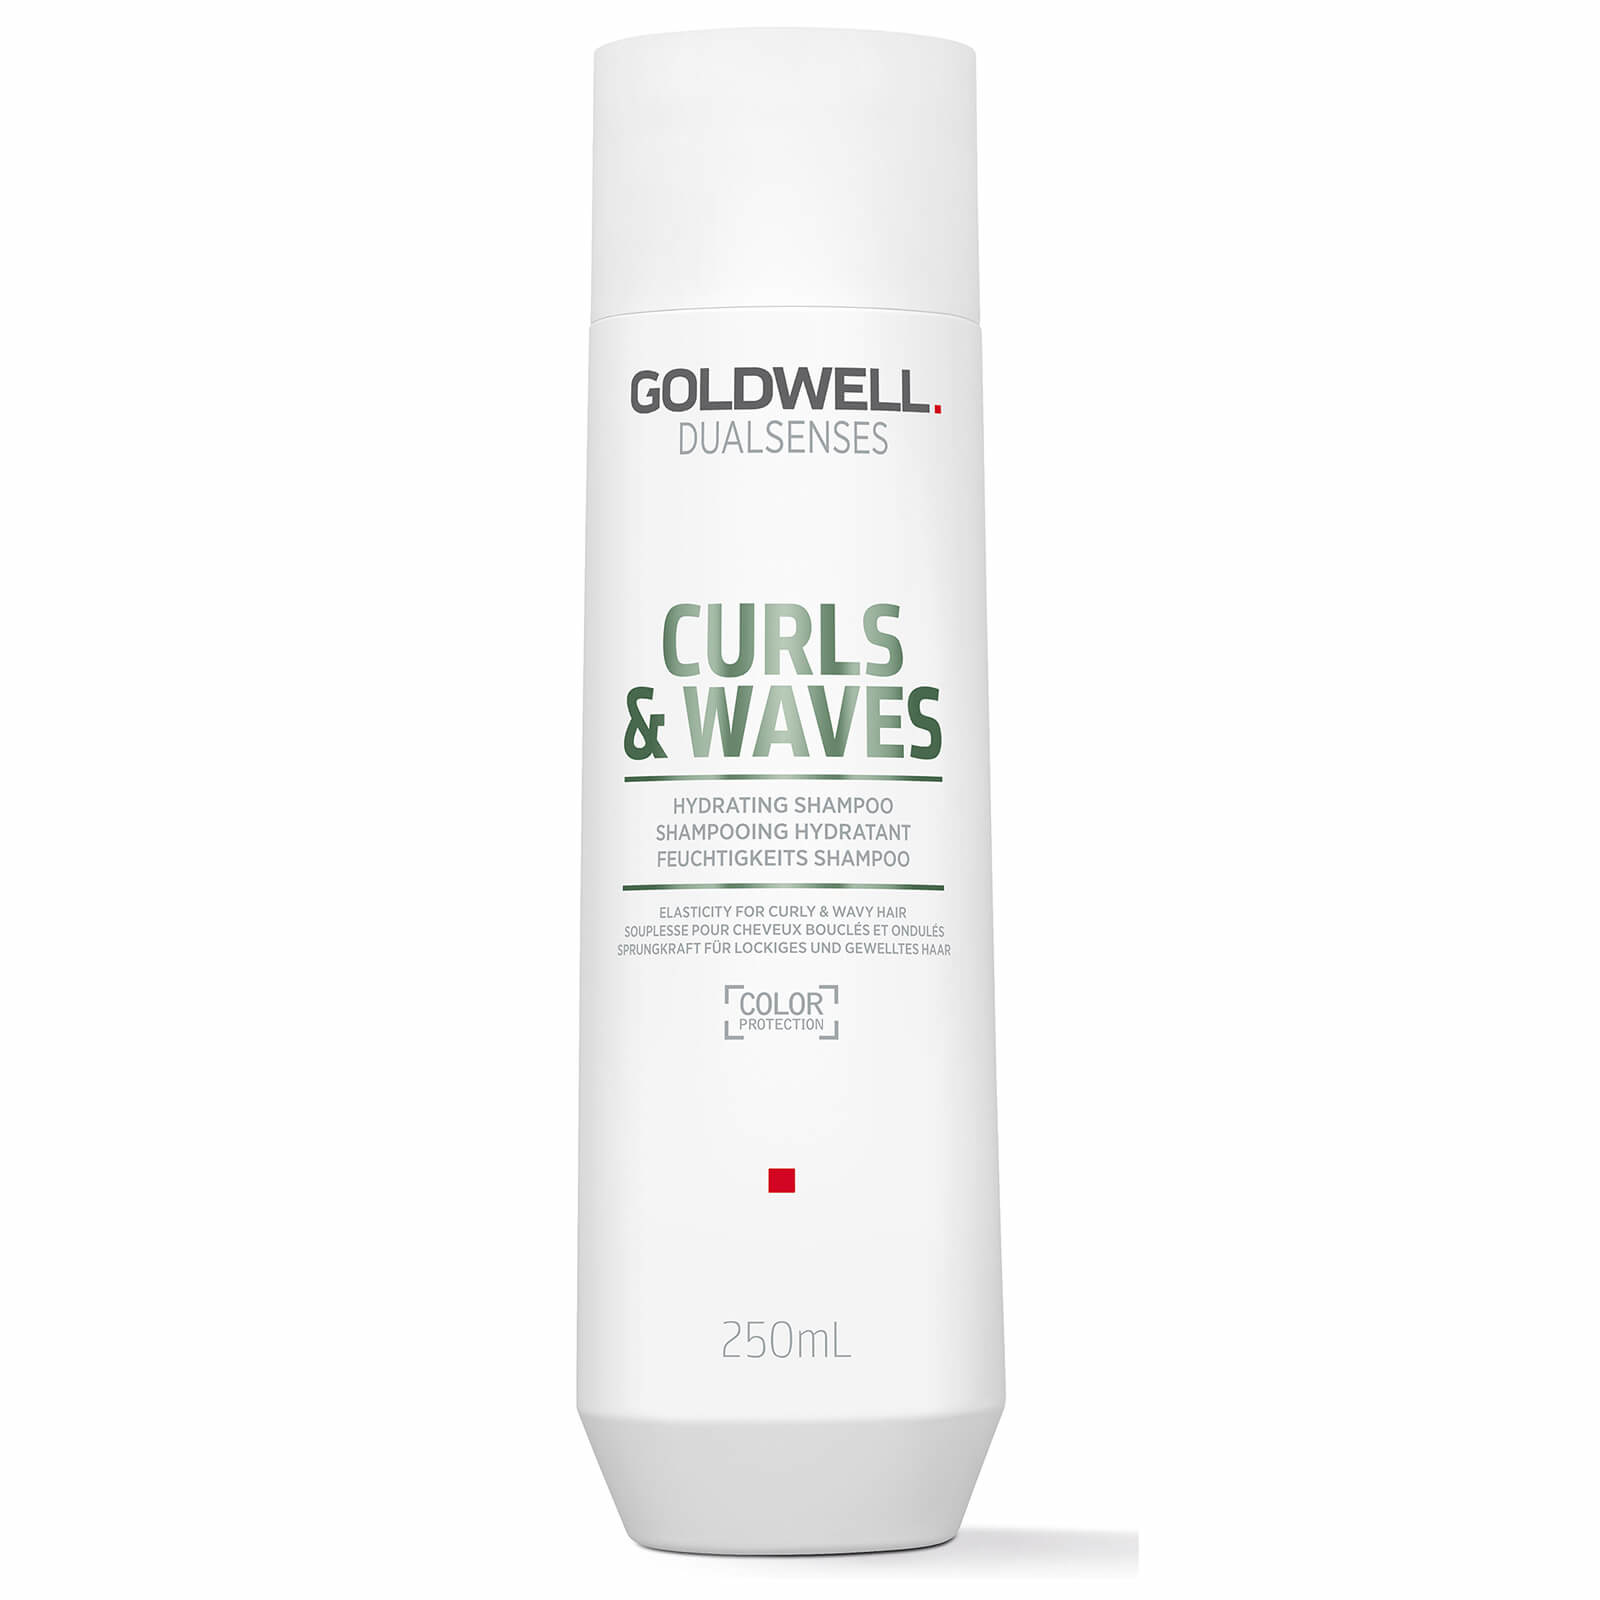 DUALSENSES | CURLS & WAVES  Hydrating Shampoo